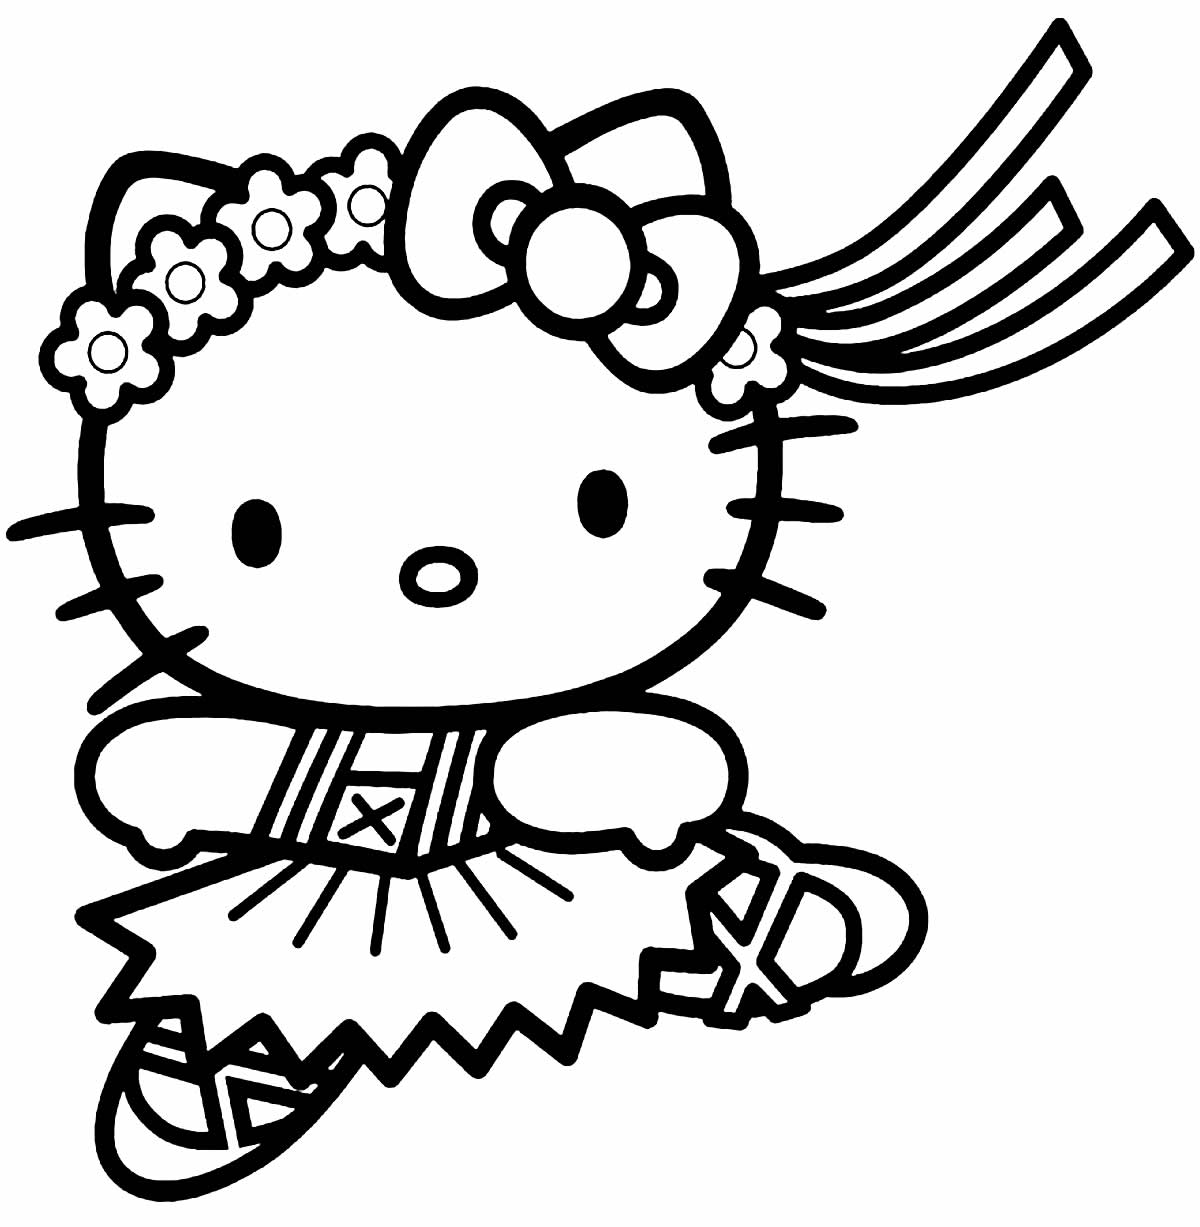 Coloriage Hello Kitty